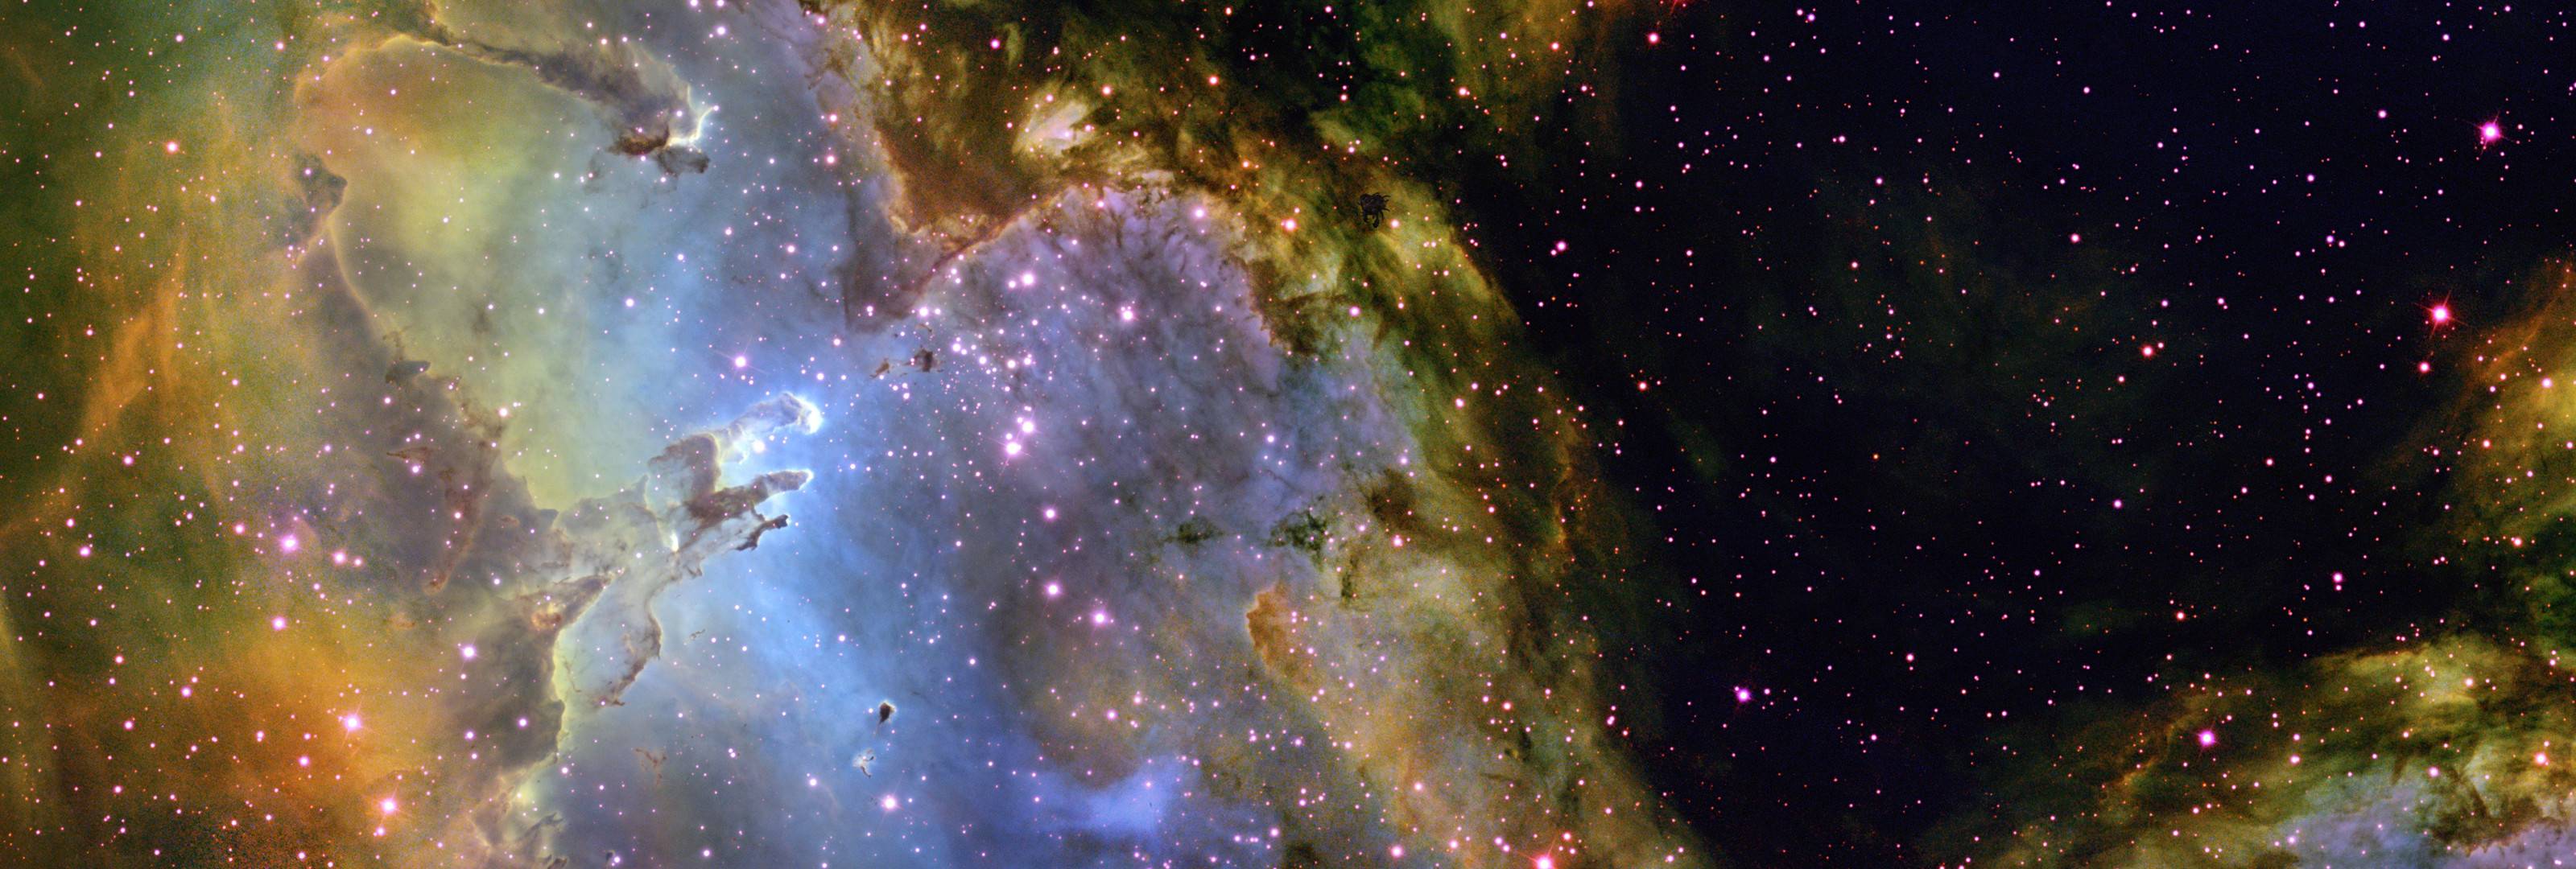 Eagle Nebula Wallpaper 3200 X 1080